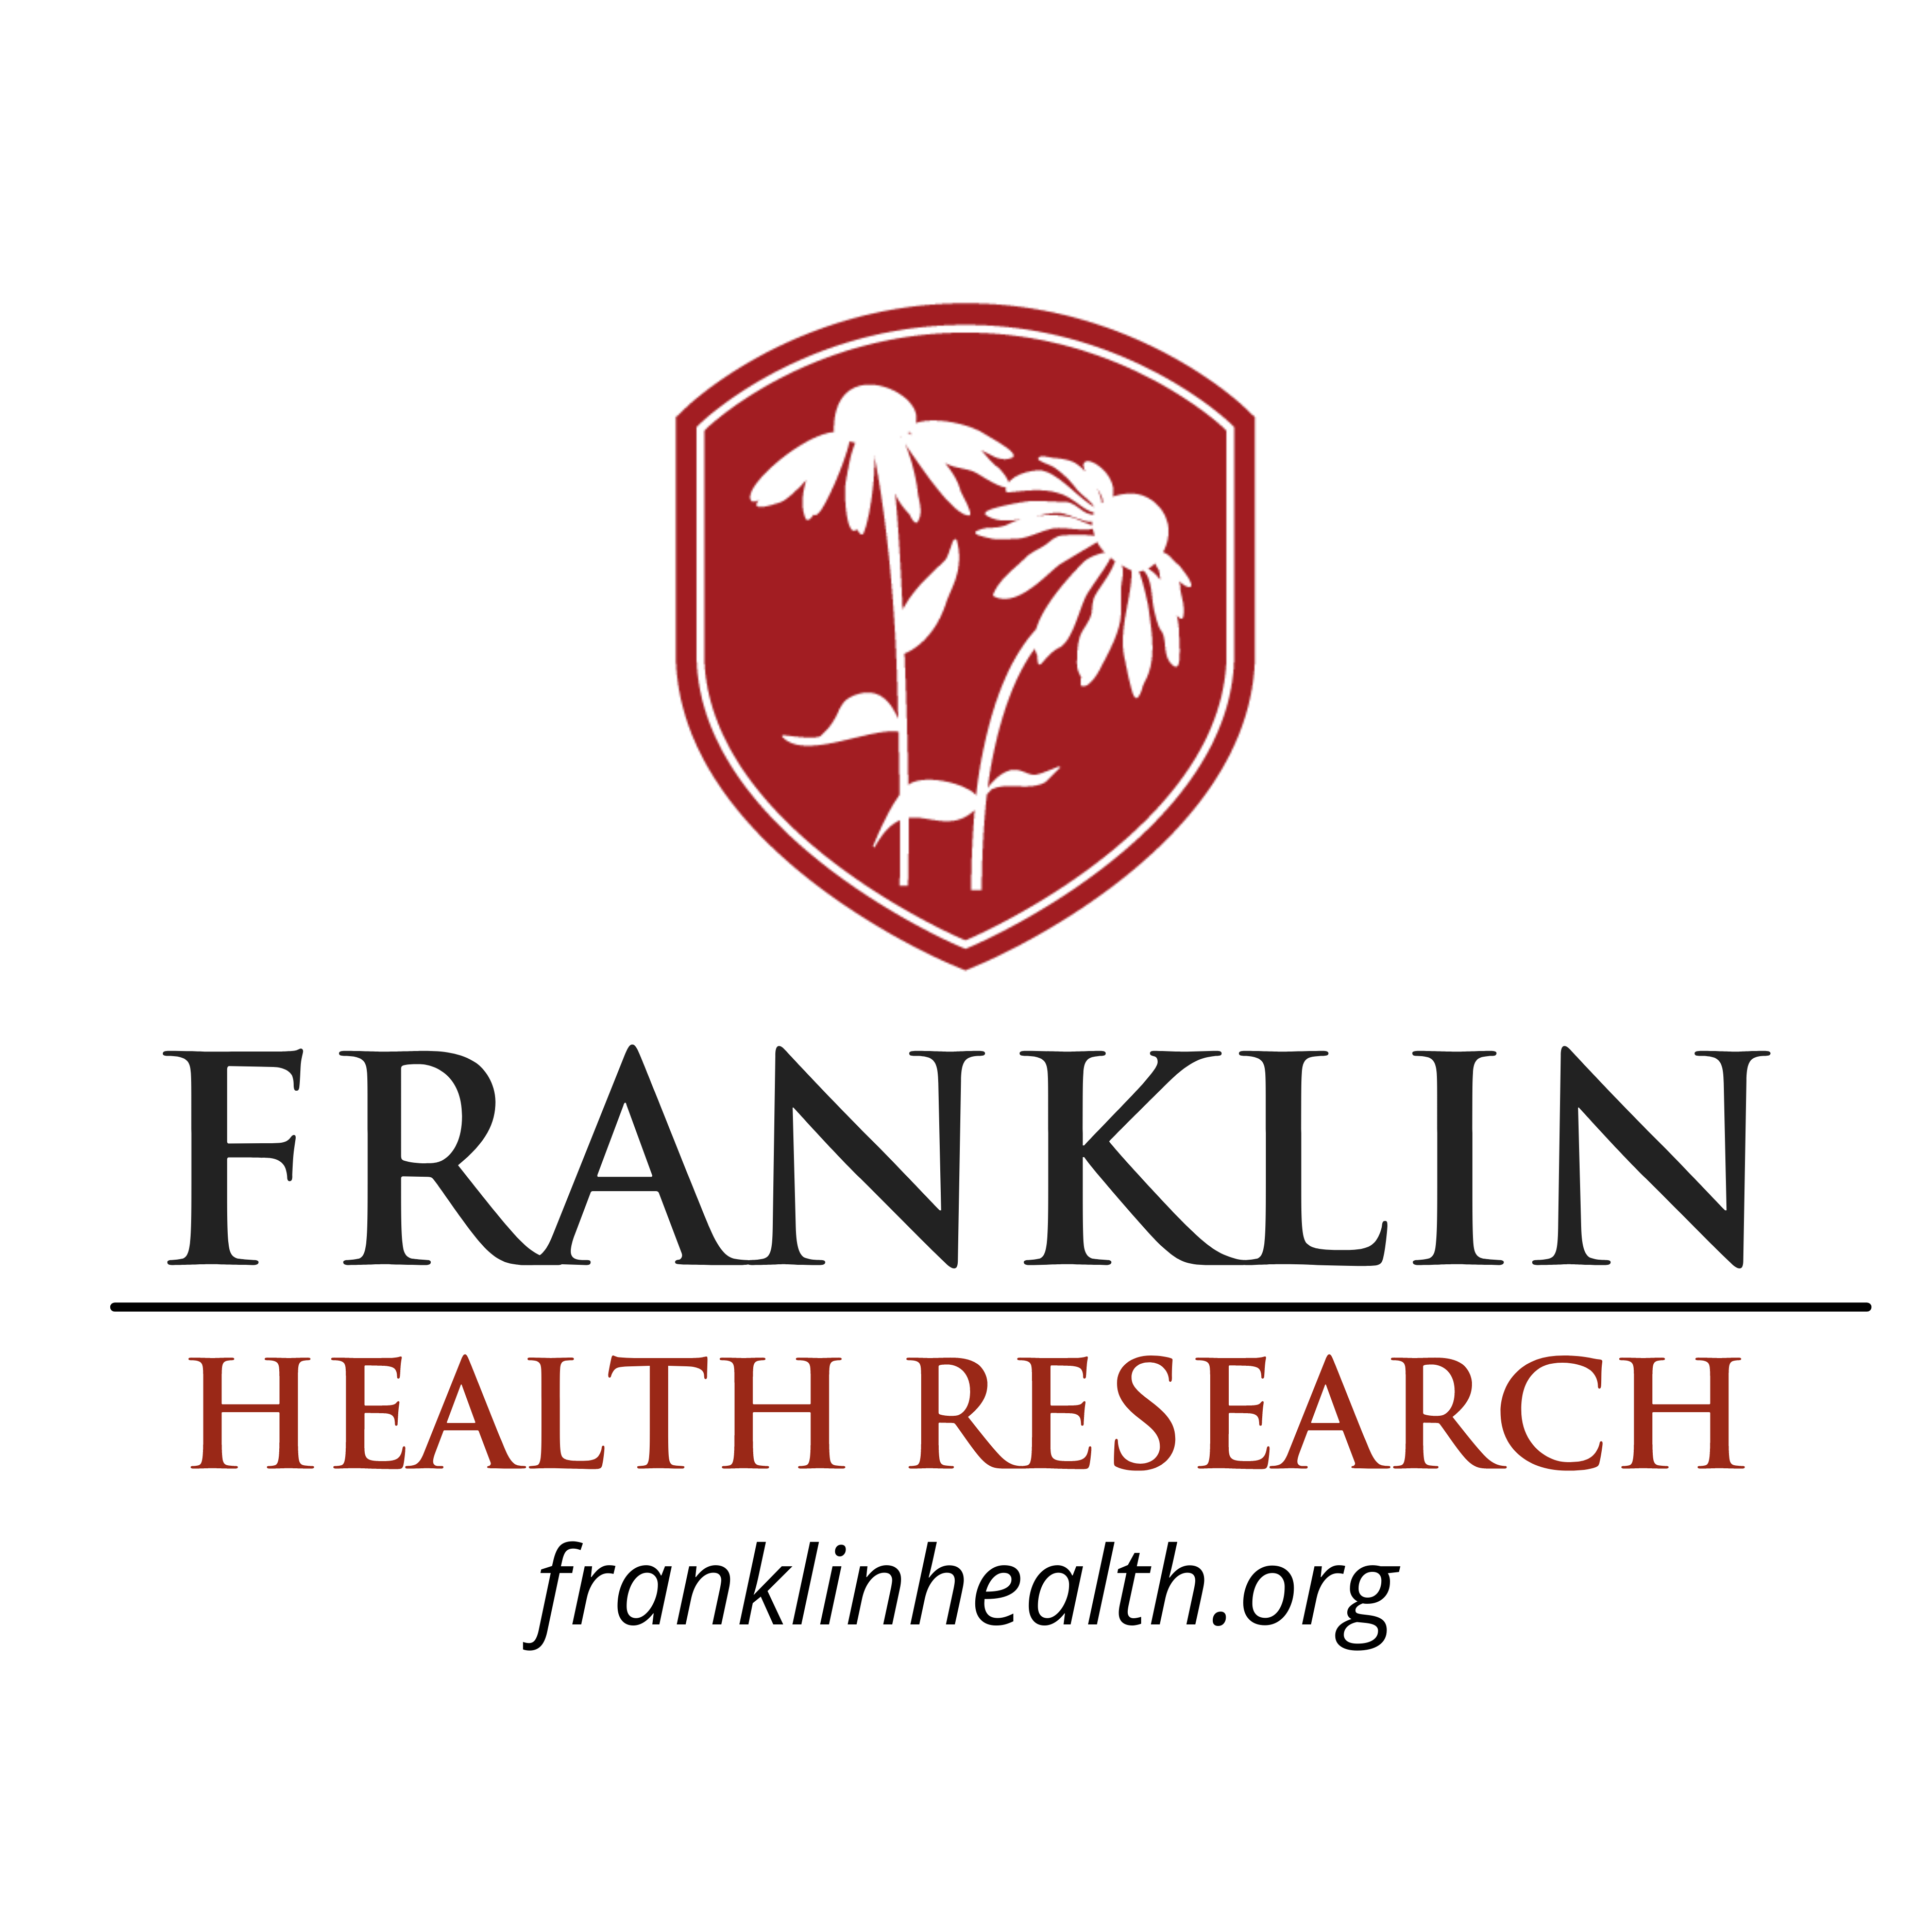 Franklin Health Research Logo